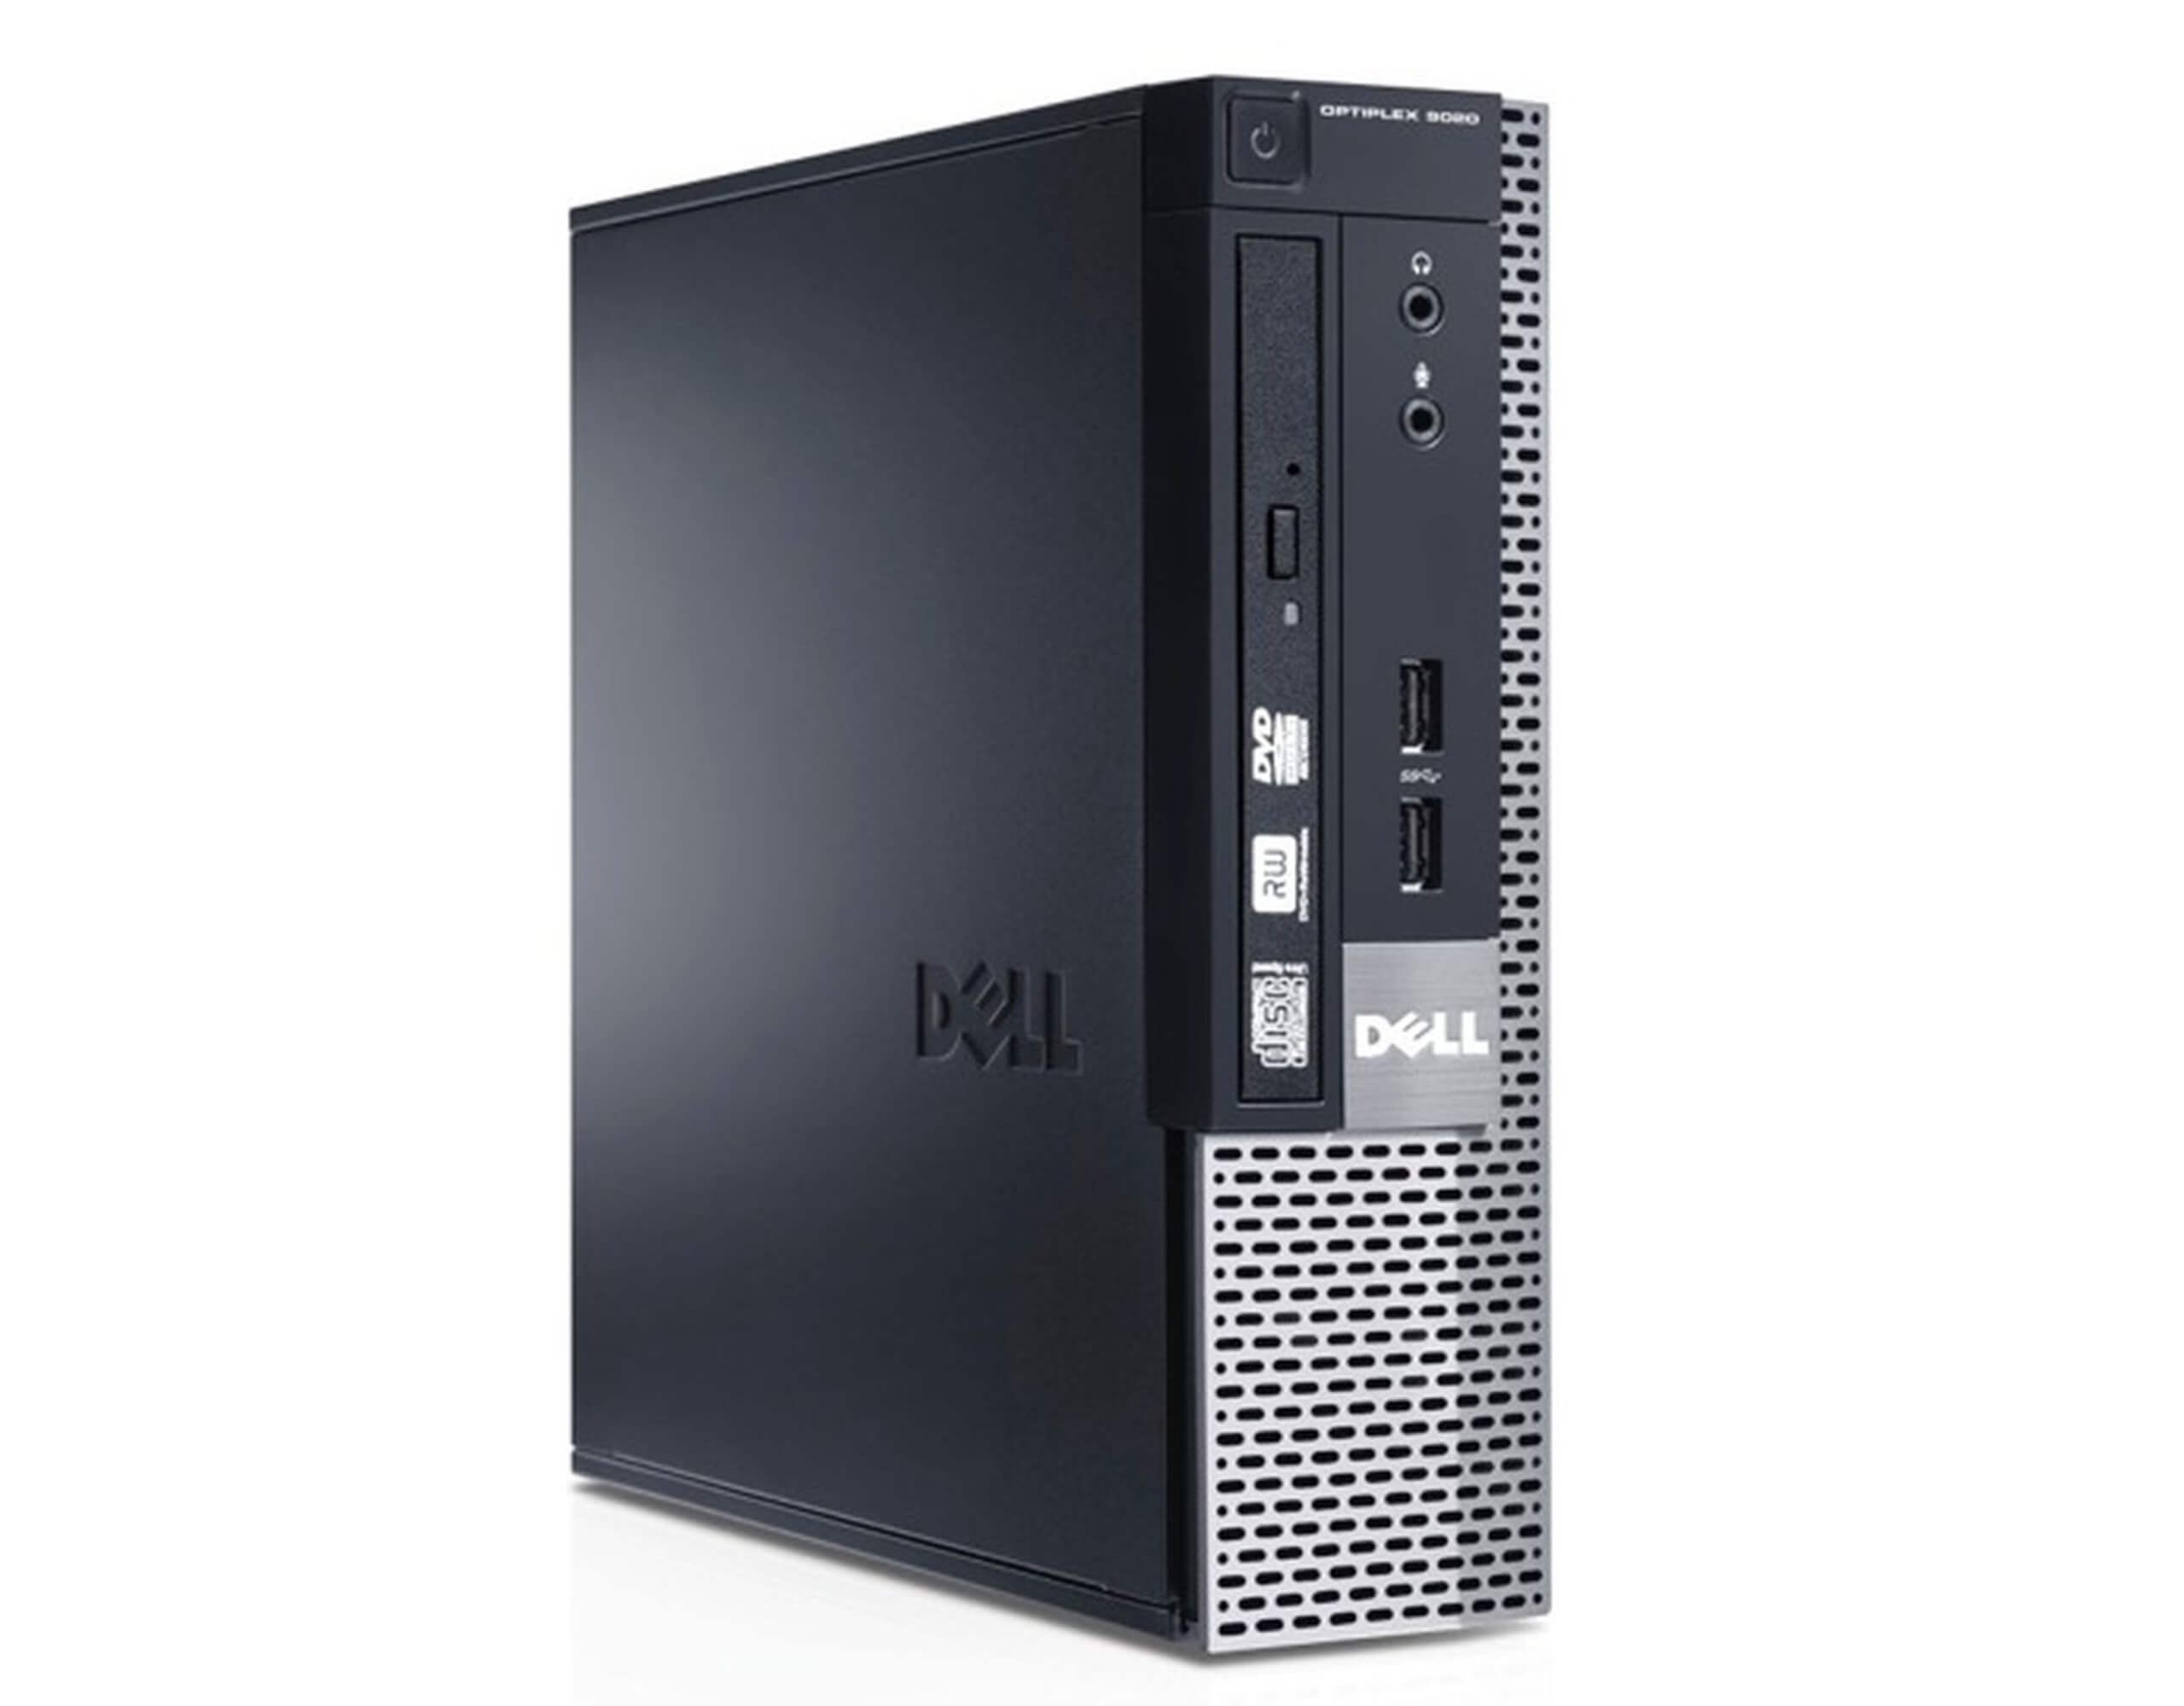 DELL 9020 USFF I5-4590S 3.0 / 8192 MB DDR3 / 500 GB / DVD-RW / WINDOWS 10 HOME